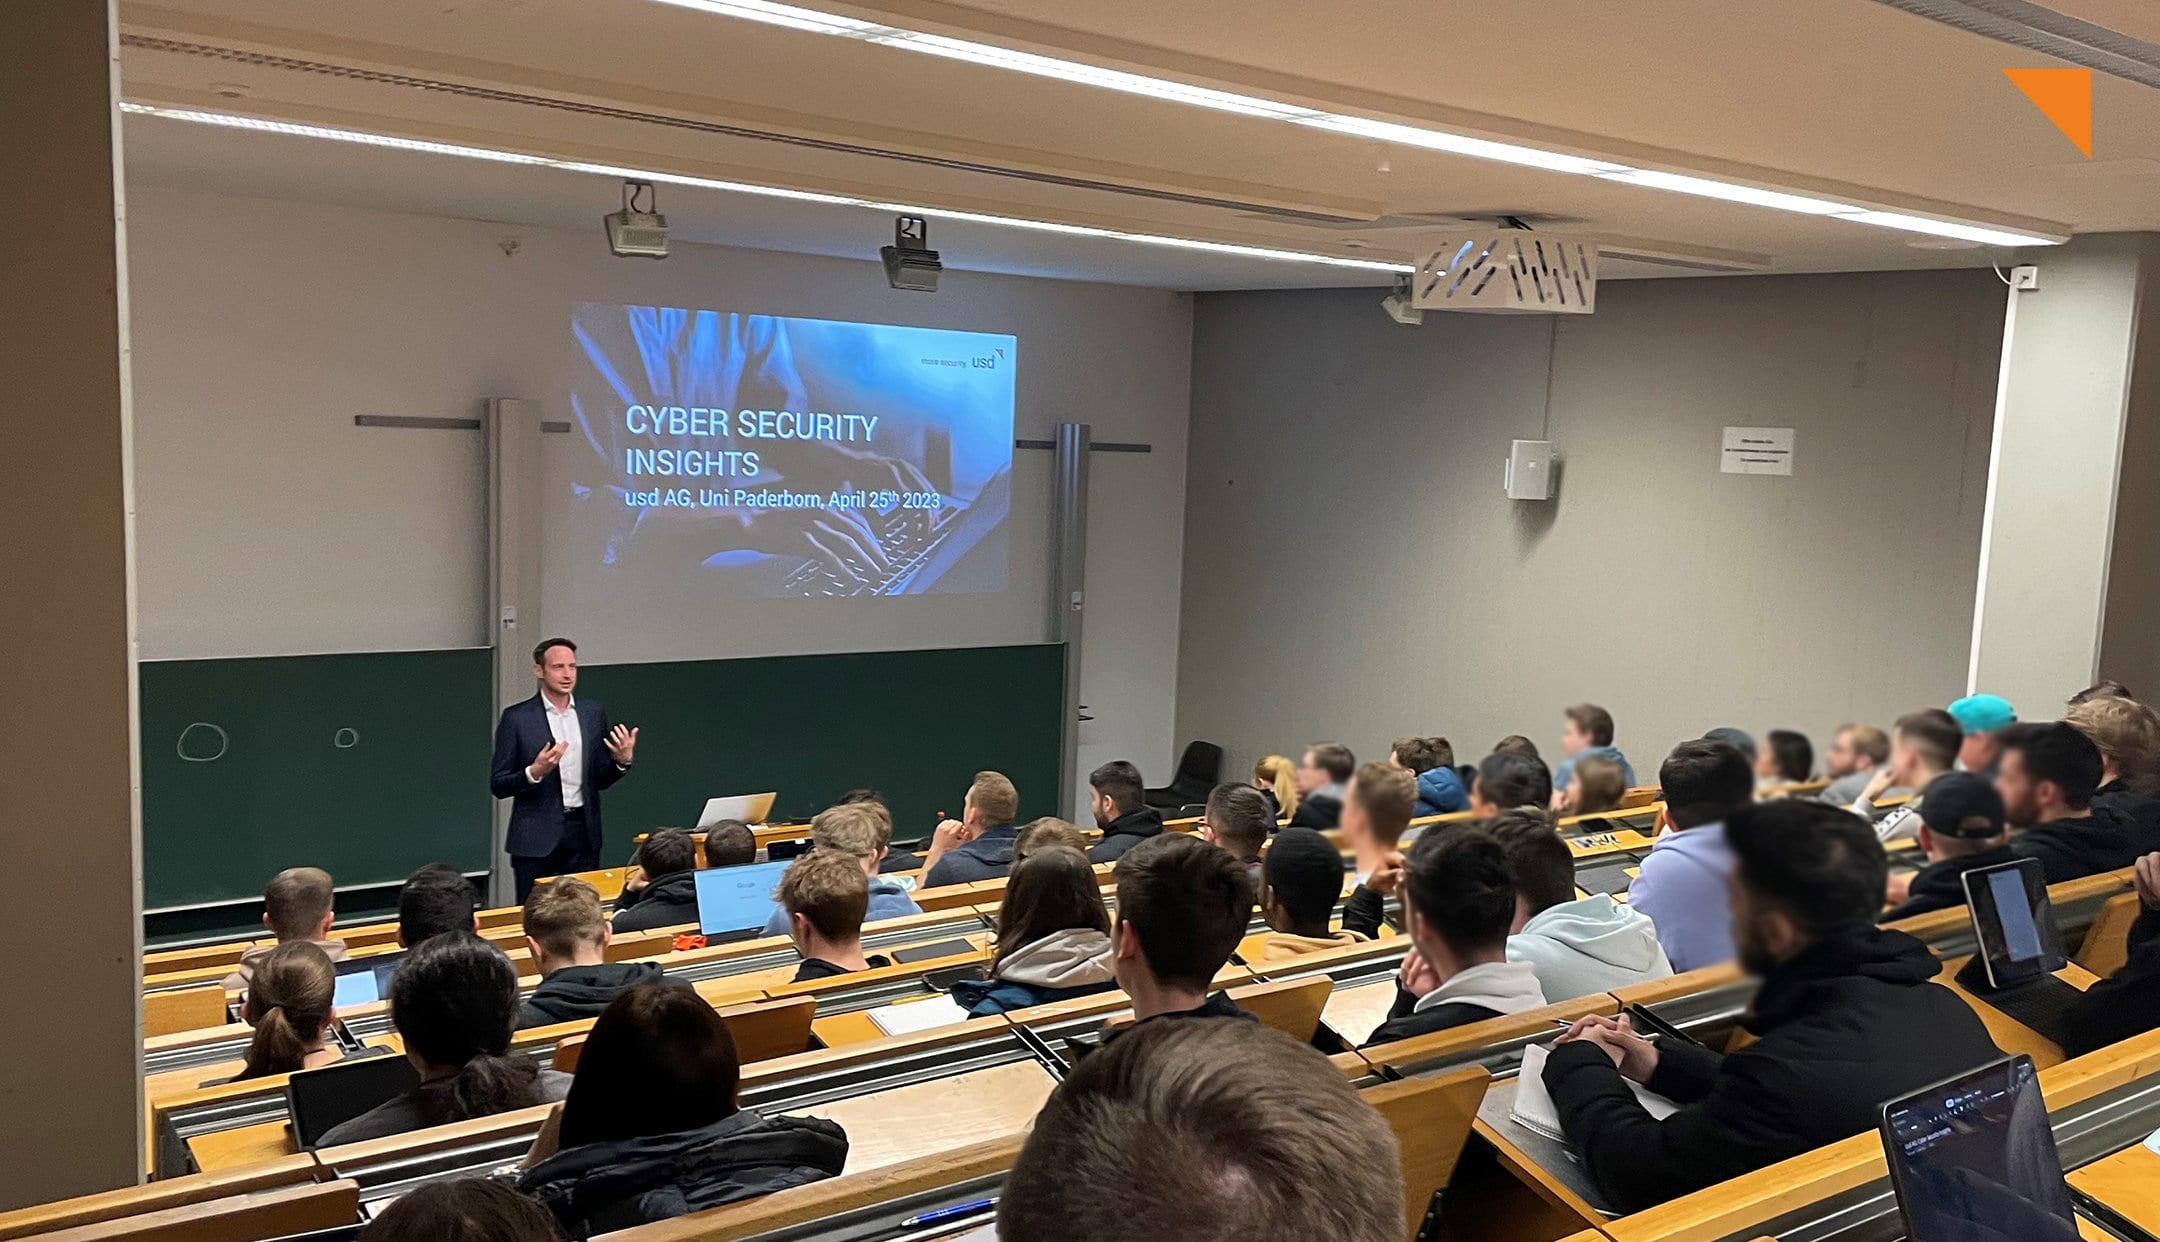 Cyber Security Insights: usd AG hält Gastvorlesung an der Universität Paderborn